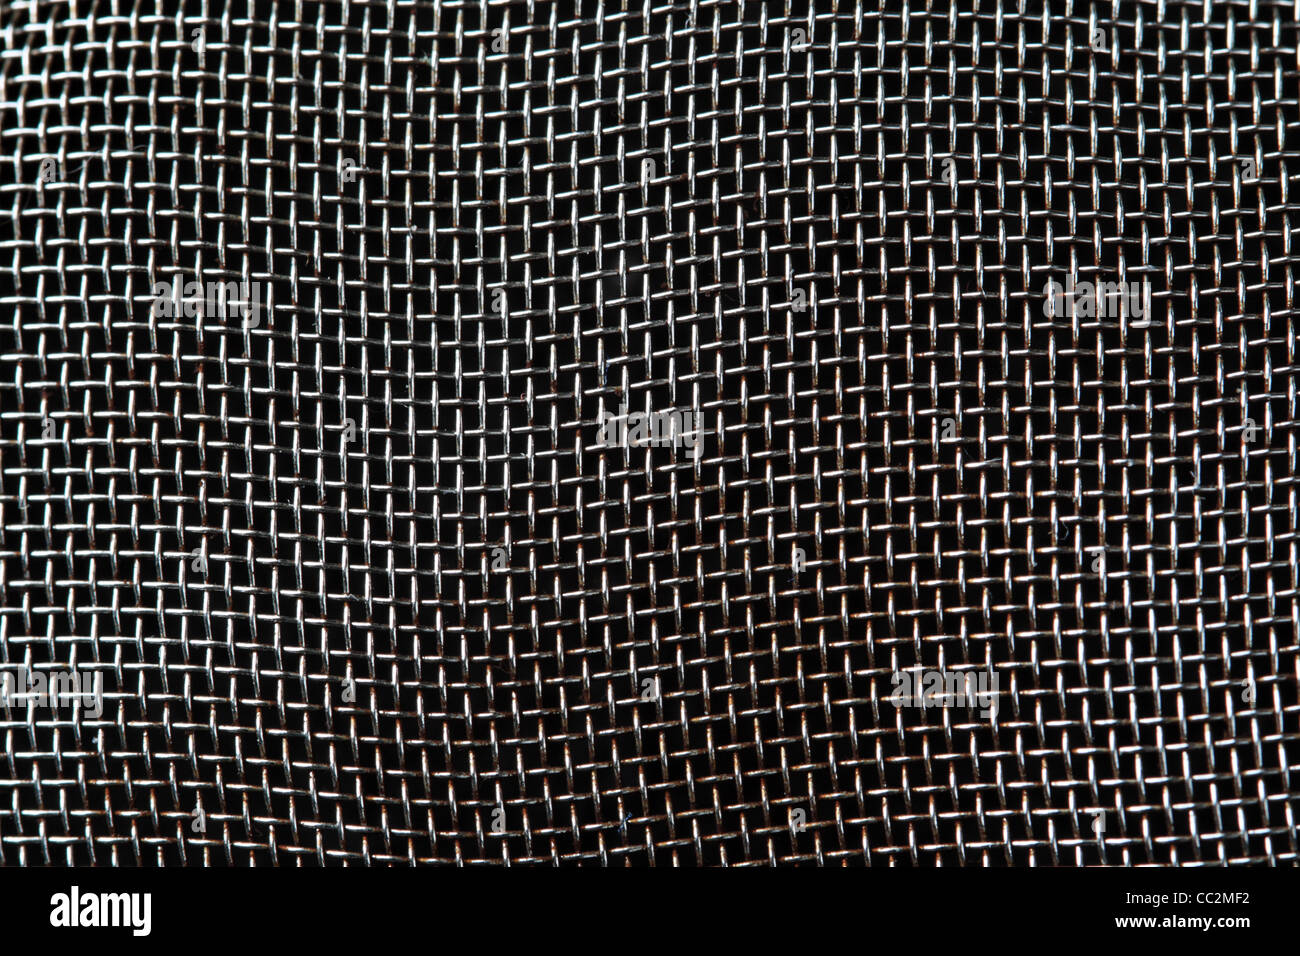 macro of woven silver metal mesh screen background Stock Photo